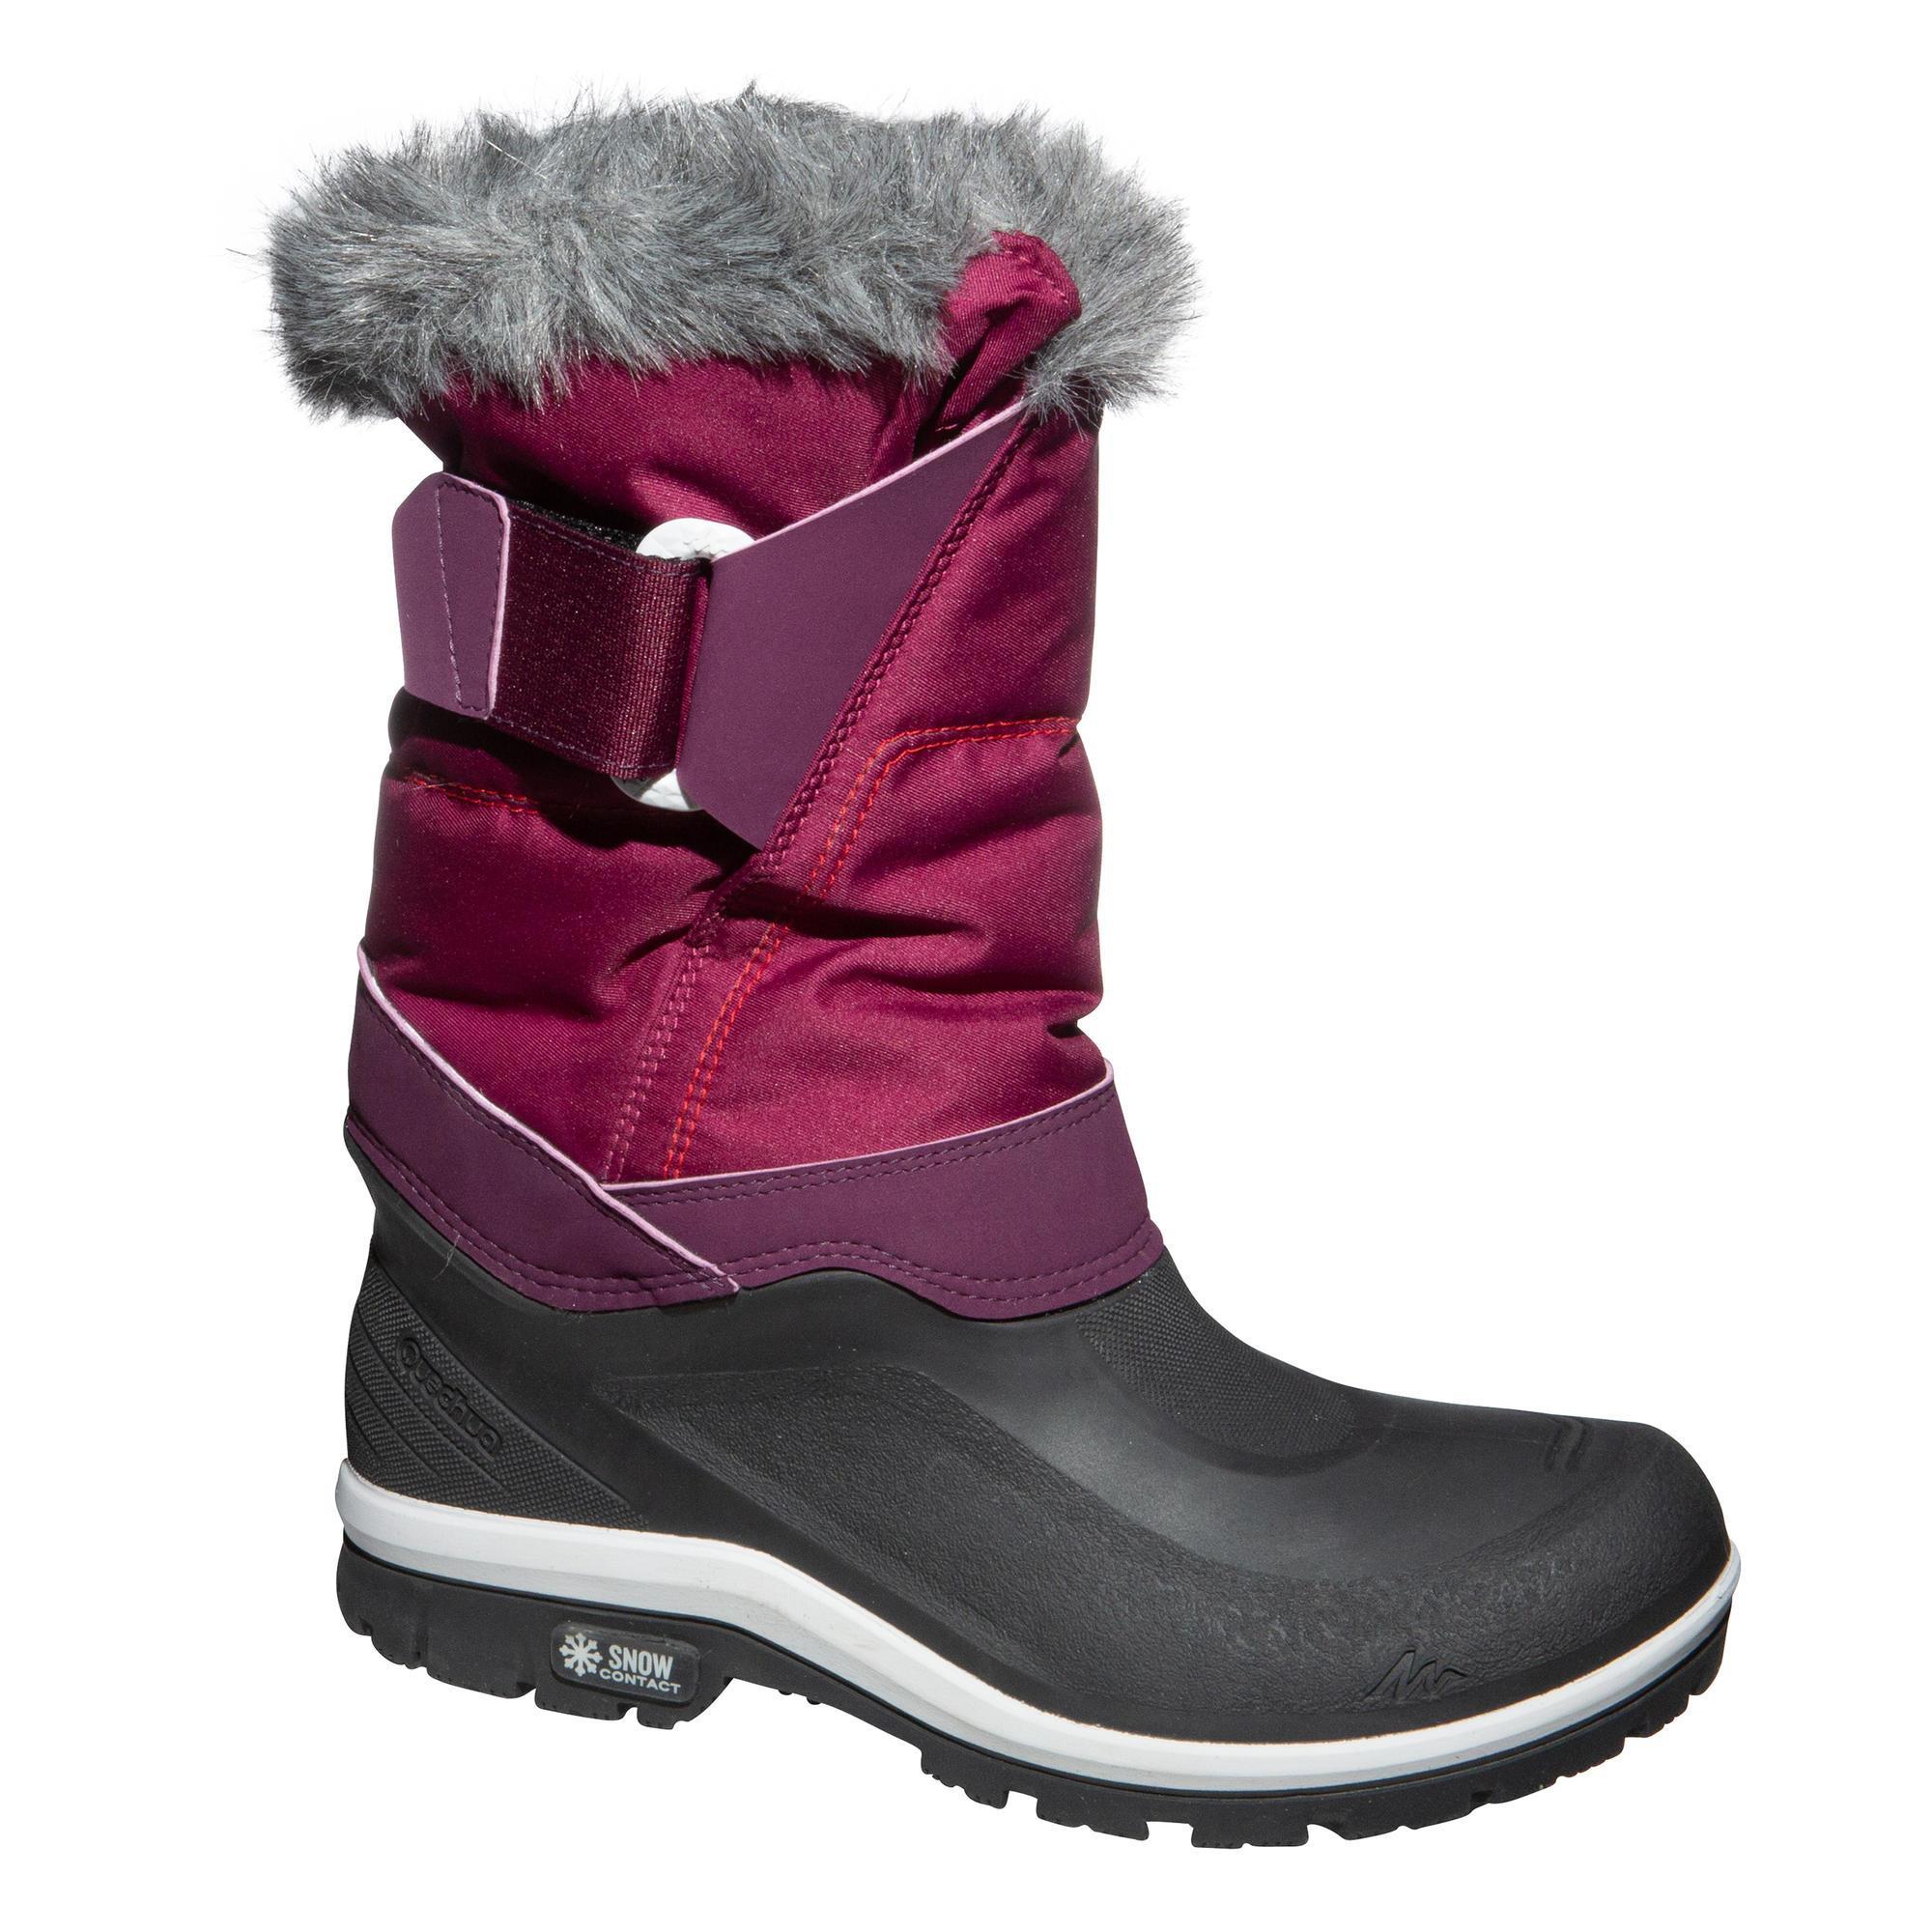 women's snow work boots